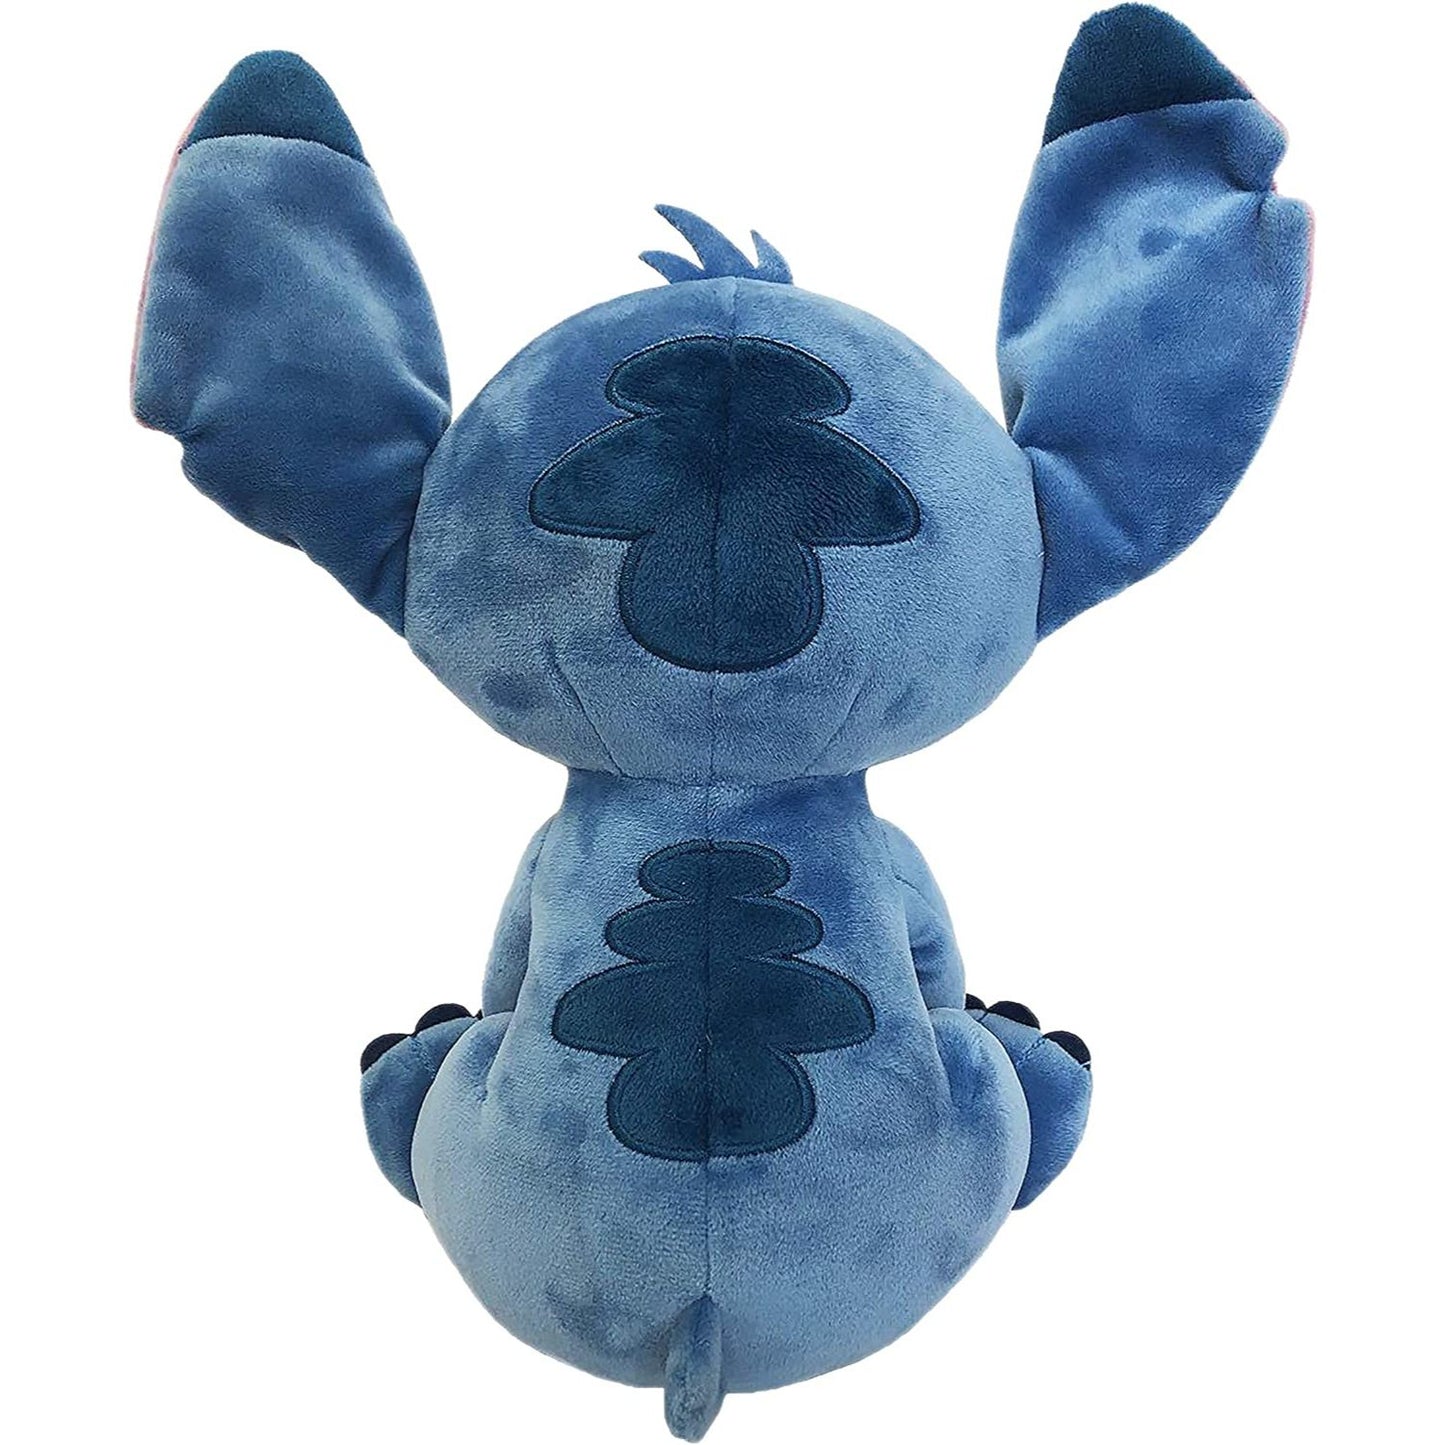 Disney - Lilo & Stitch - Stitch 9 Inch Plush, Blue